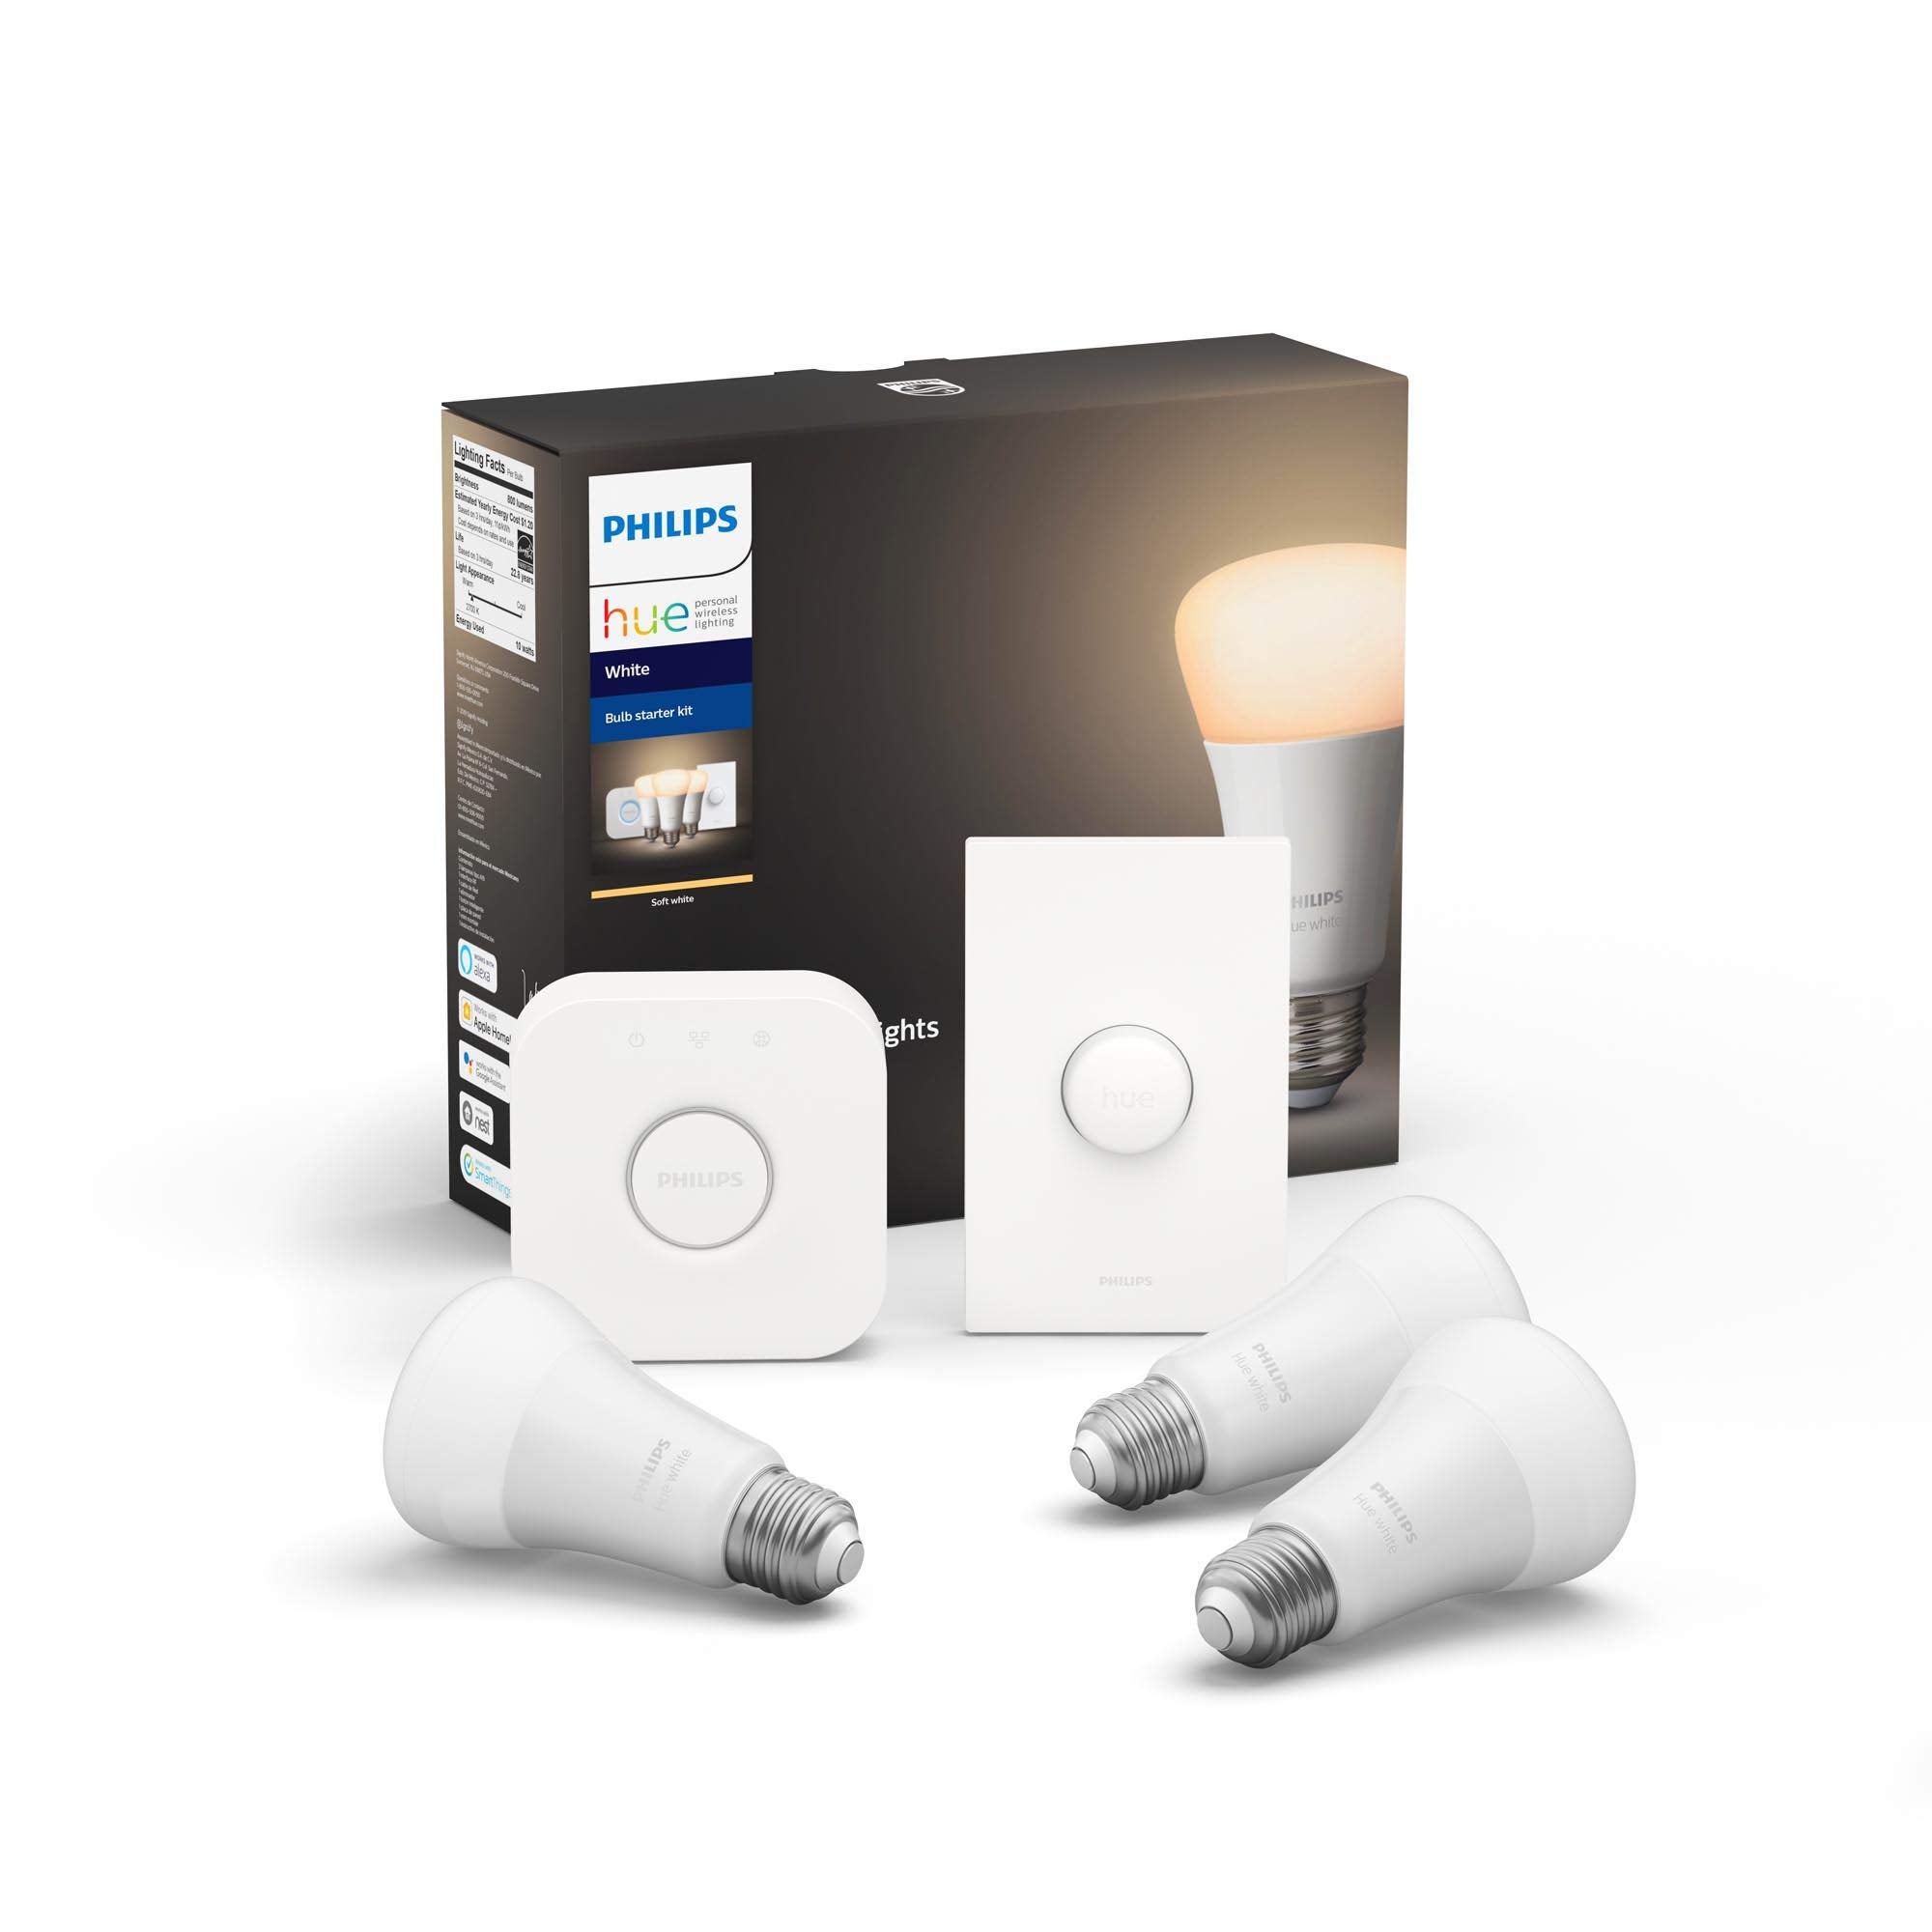 Philips Hue White and Color Ambiance LED Smart Light Bulb Starter Kit 3 A19 Smart Bulbs & 1 Hue Hub Works with Alexa, Apple HomeKit & Google Assistant 